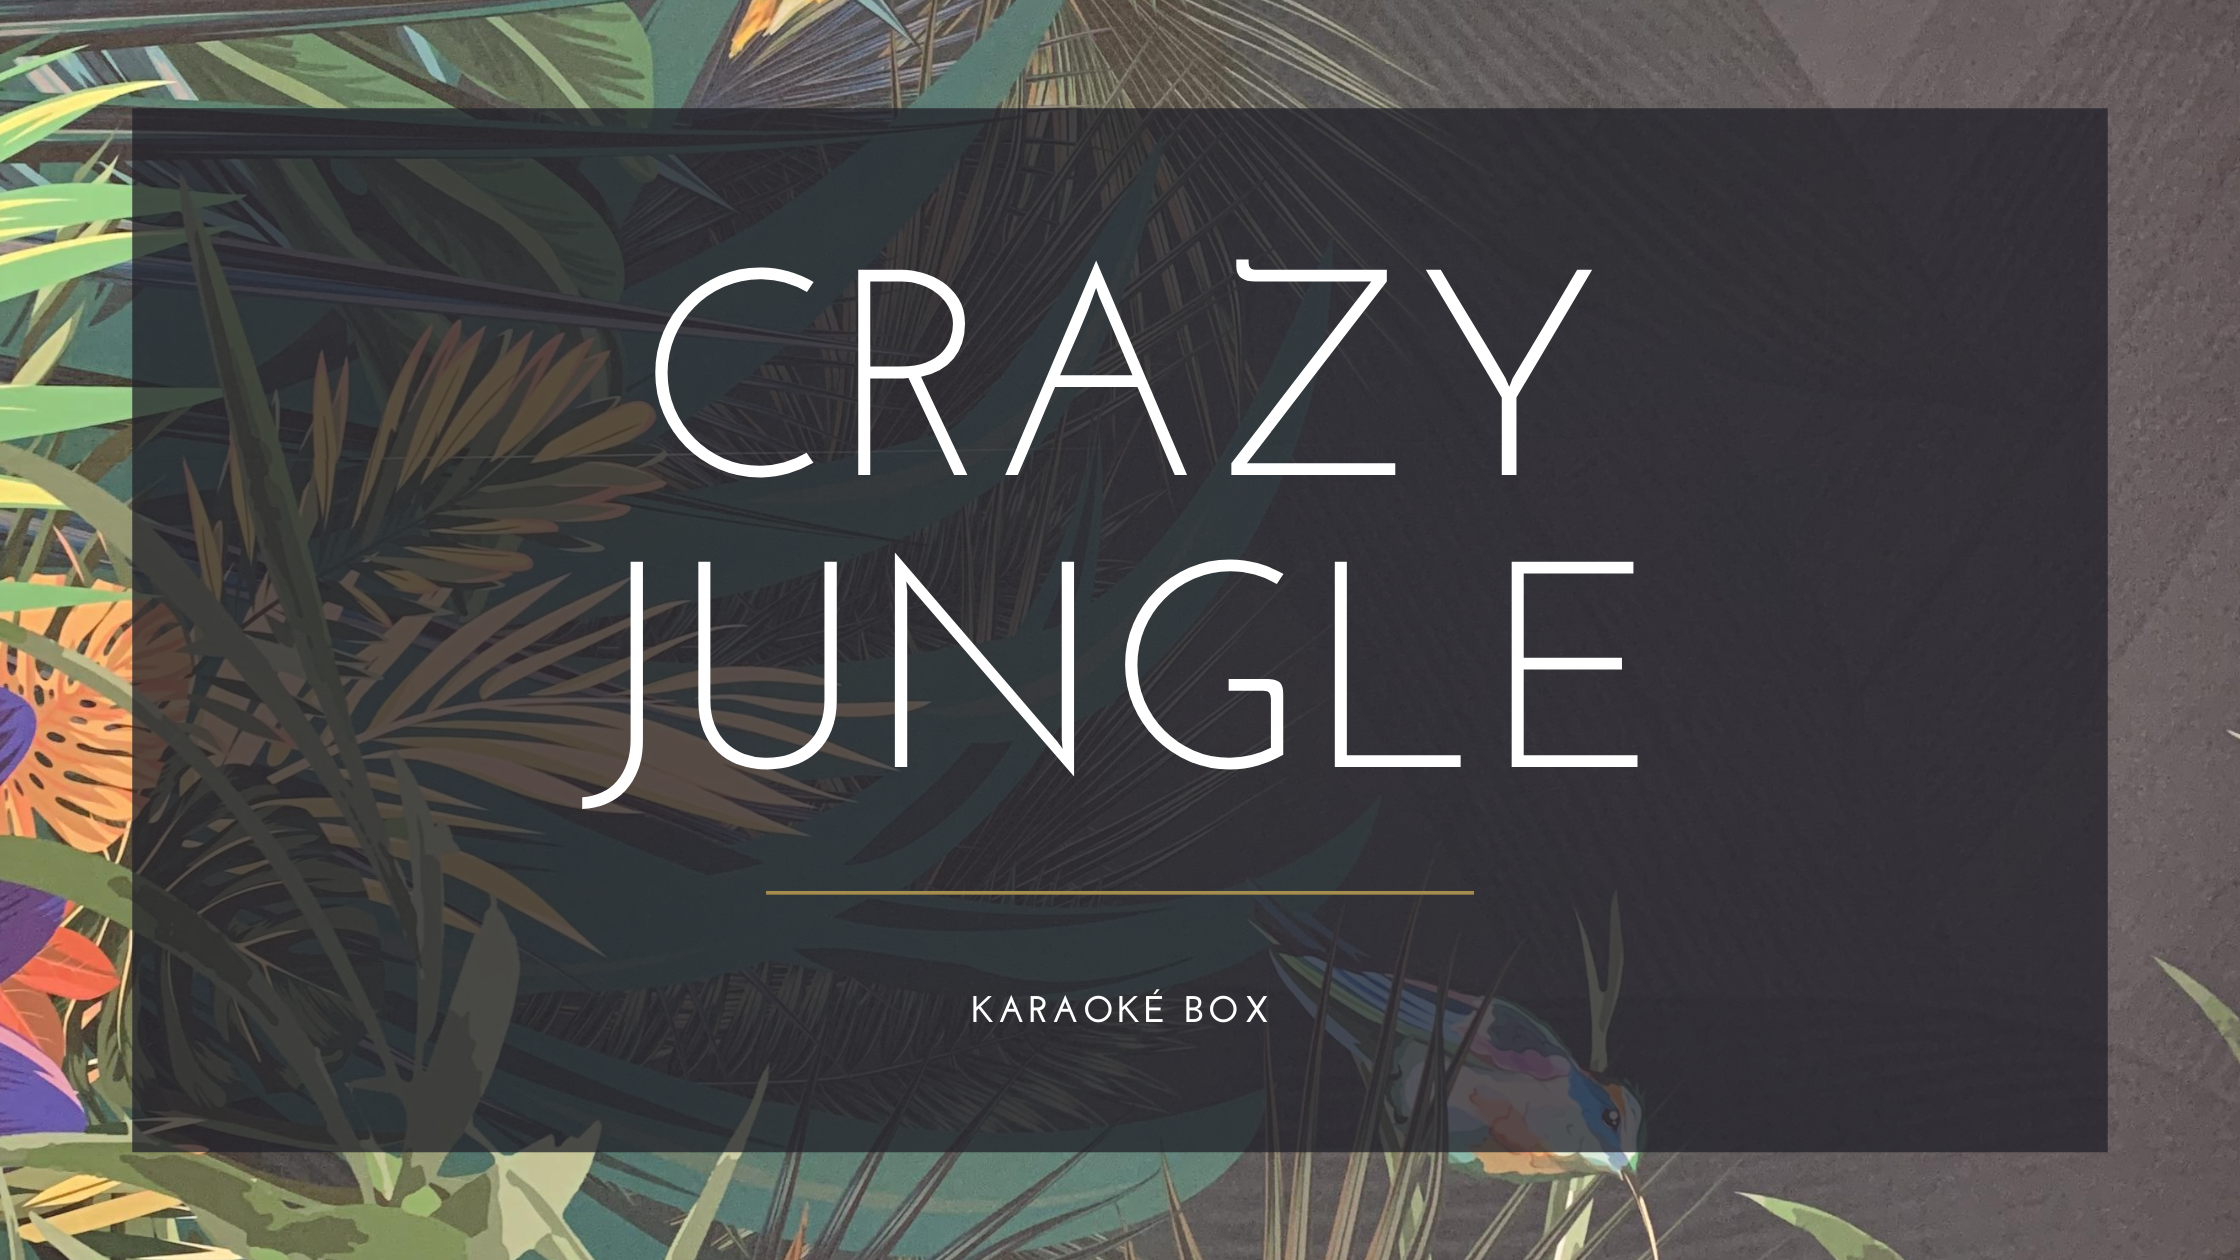 karaoké box grenoble crazy jungle